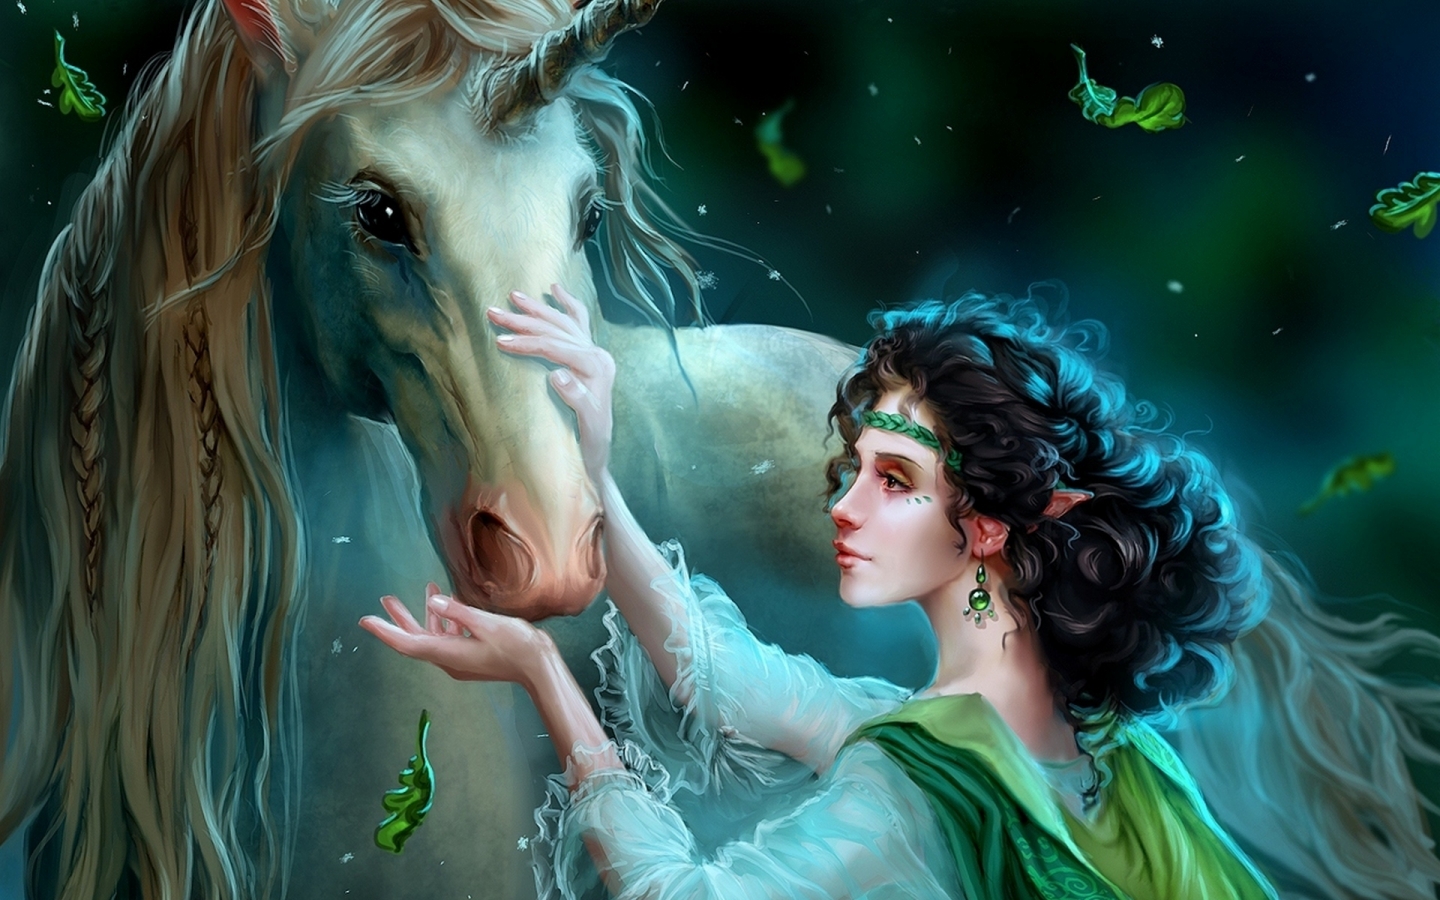 Fairytale Wild Dreamer for 1440 x 900 widescreen resolution